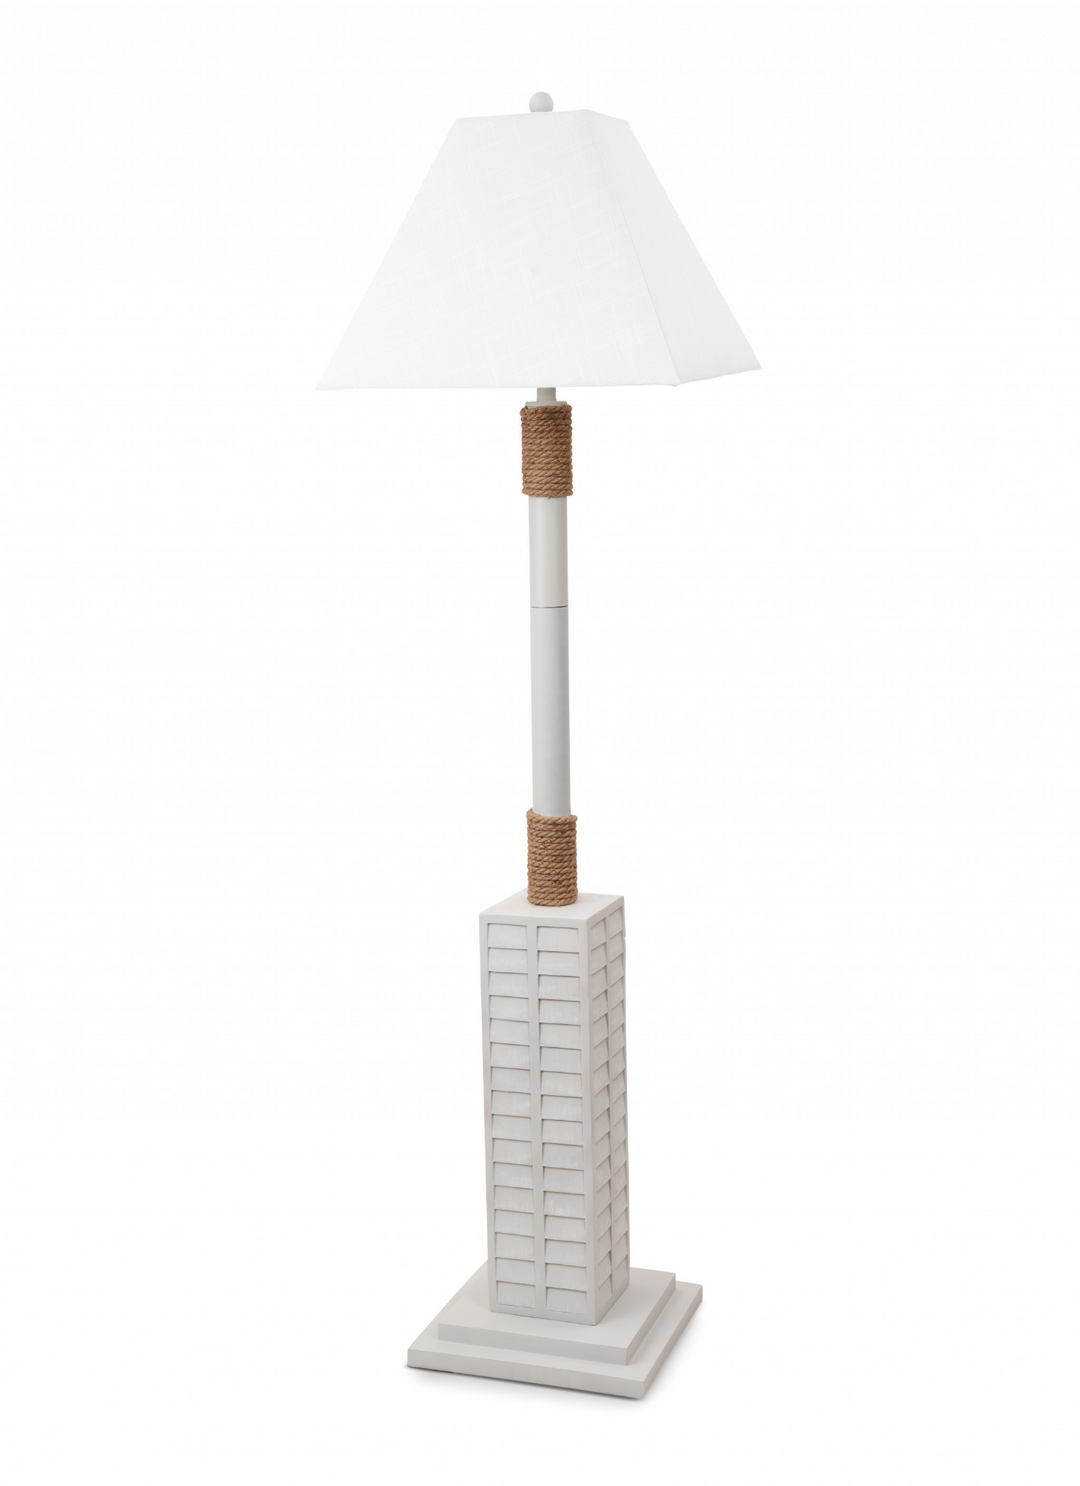 Boho Aesthetic Classic Bright White and Nautical Rope Floor Lamp | Biophilic Design Airbnb Decor Furniture 